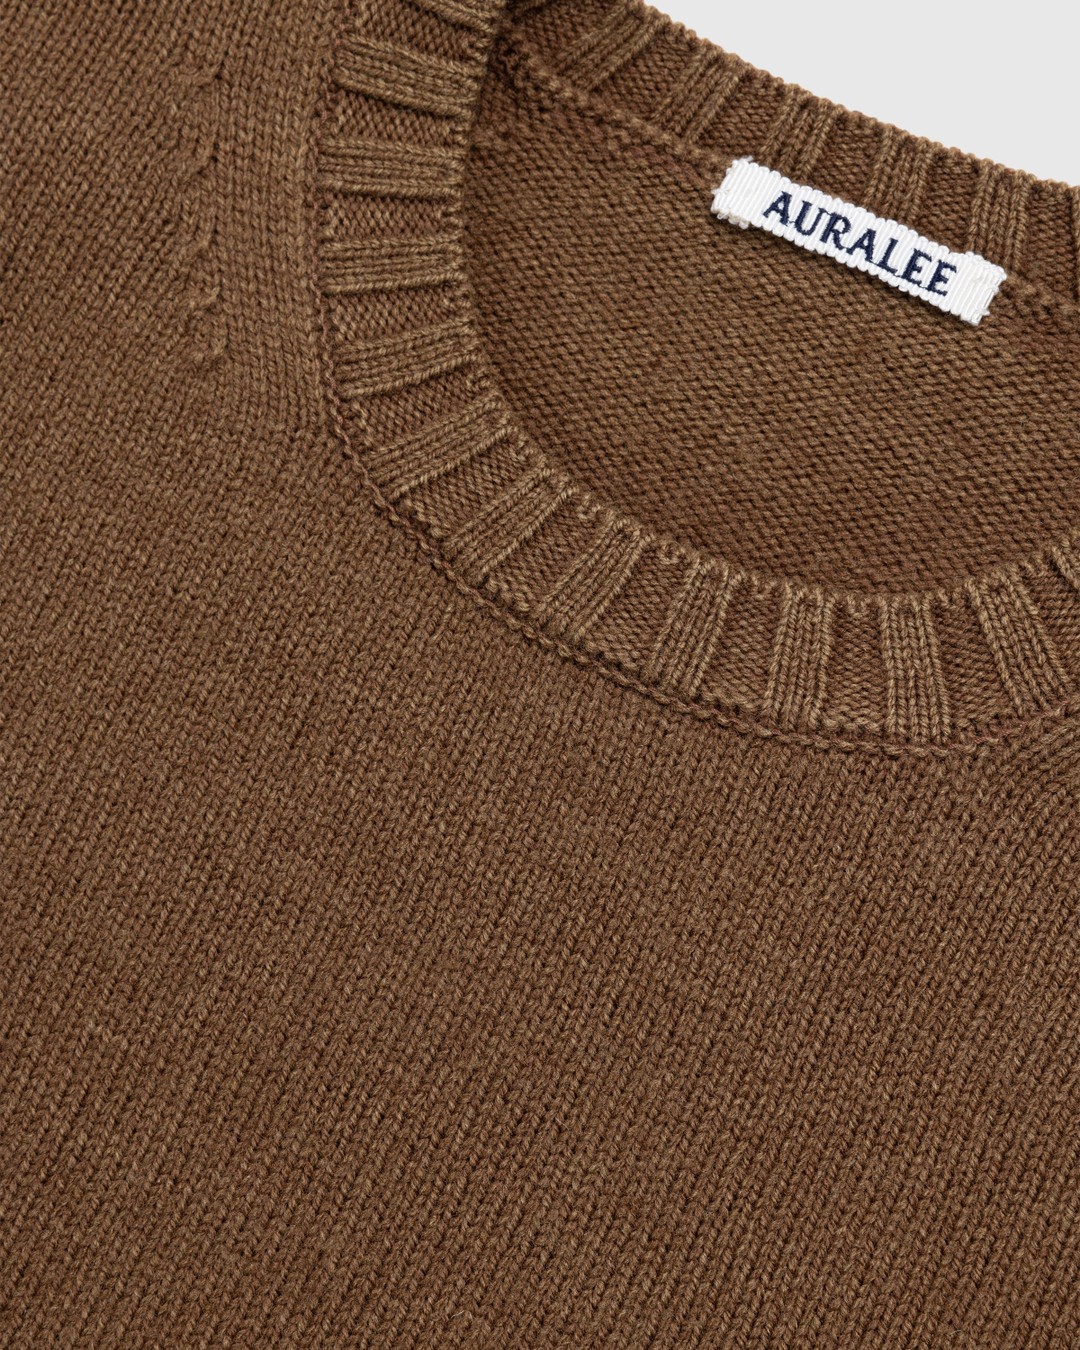 Auralee – Washed French Merino Knit Crewneck Brown | Highsnobiety Shop